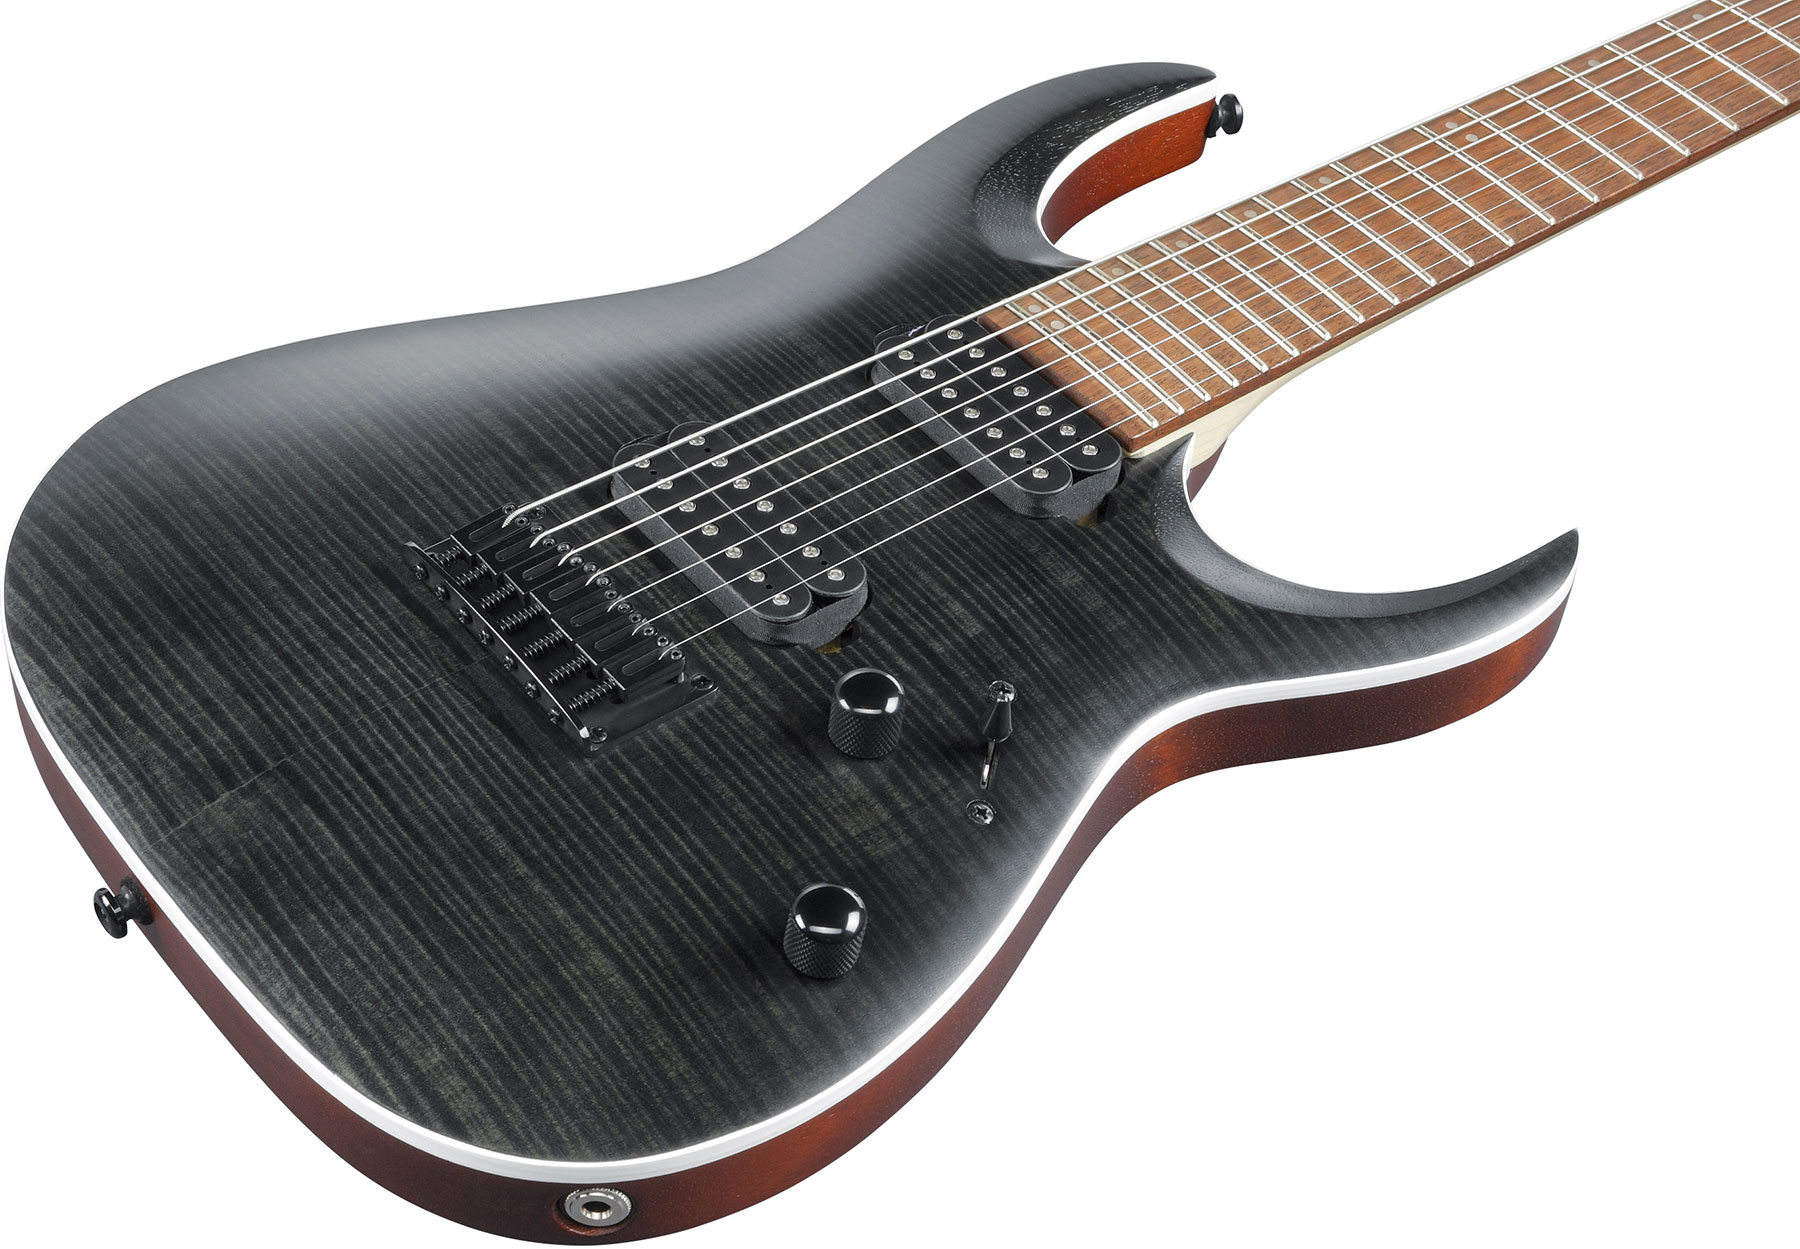 Ibanez Rga742fm Tgf Standard Hh Ht Jat - Transparent Gray Flat - 7 string electric guitar - Variation 2